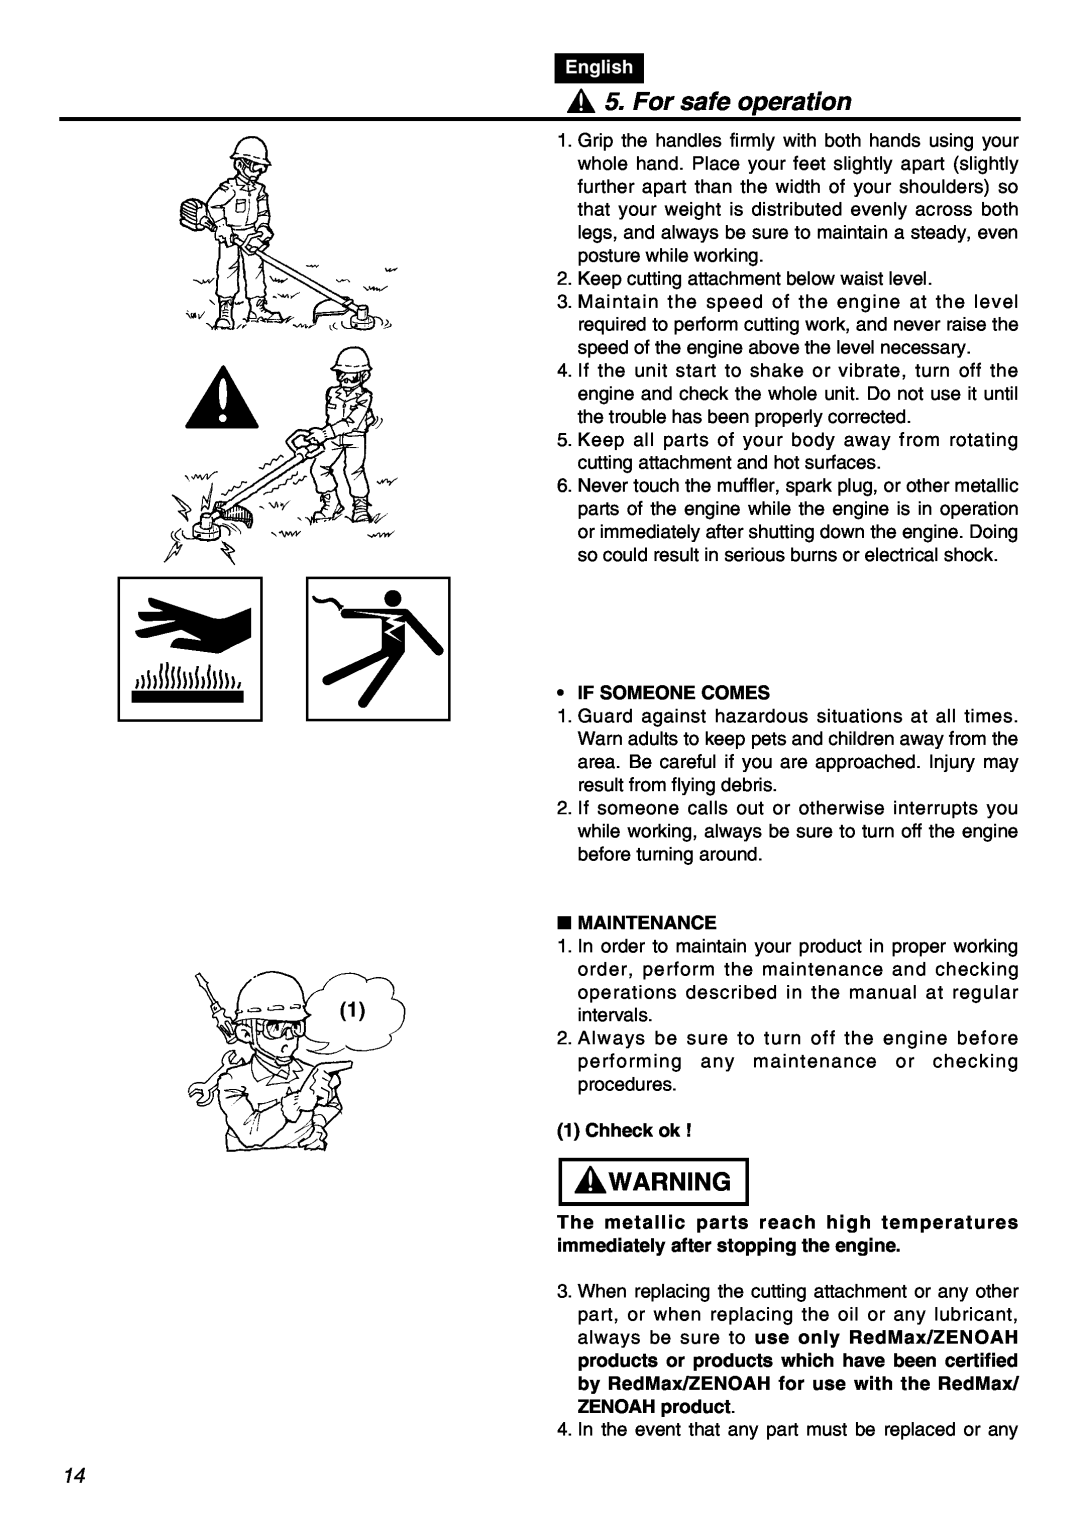 Zenoah BT250 manual For safe operation, English, If Someone Comes, Maintenance, Chheck ok 